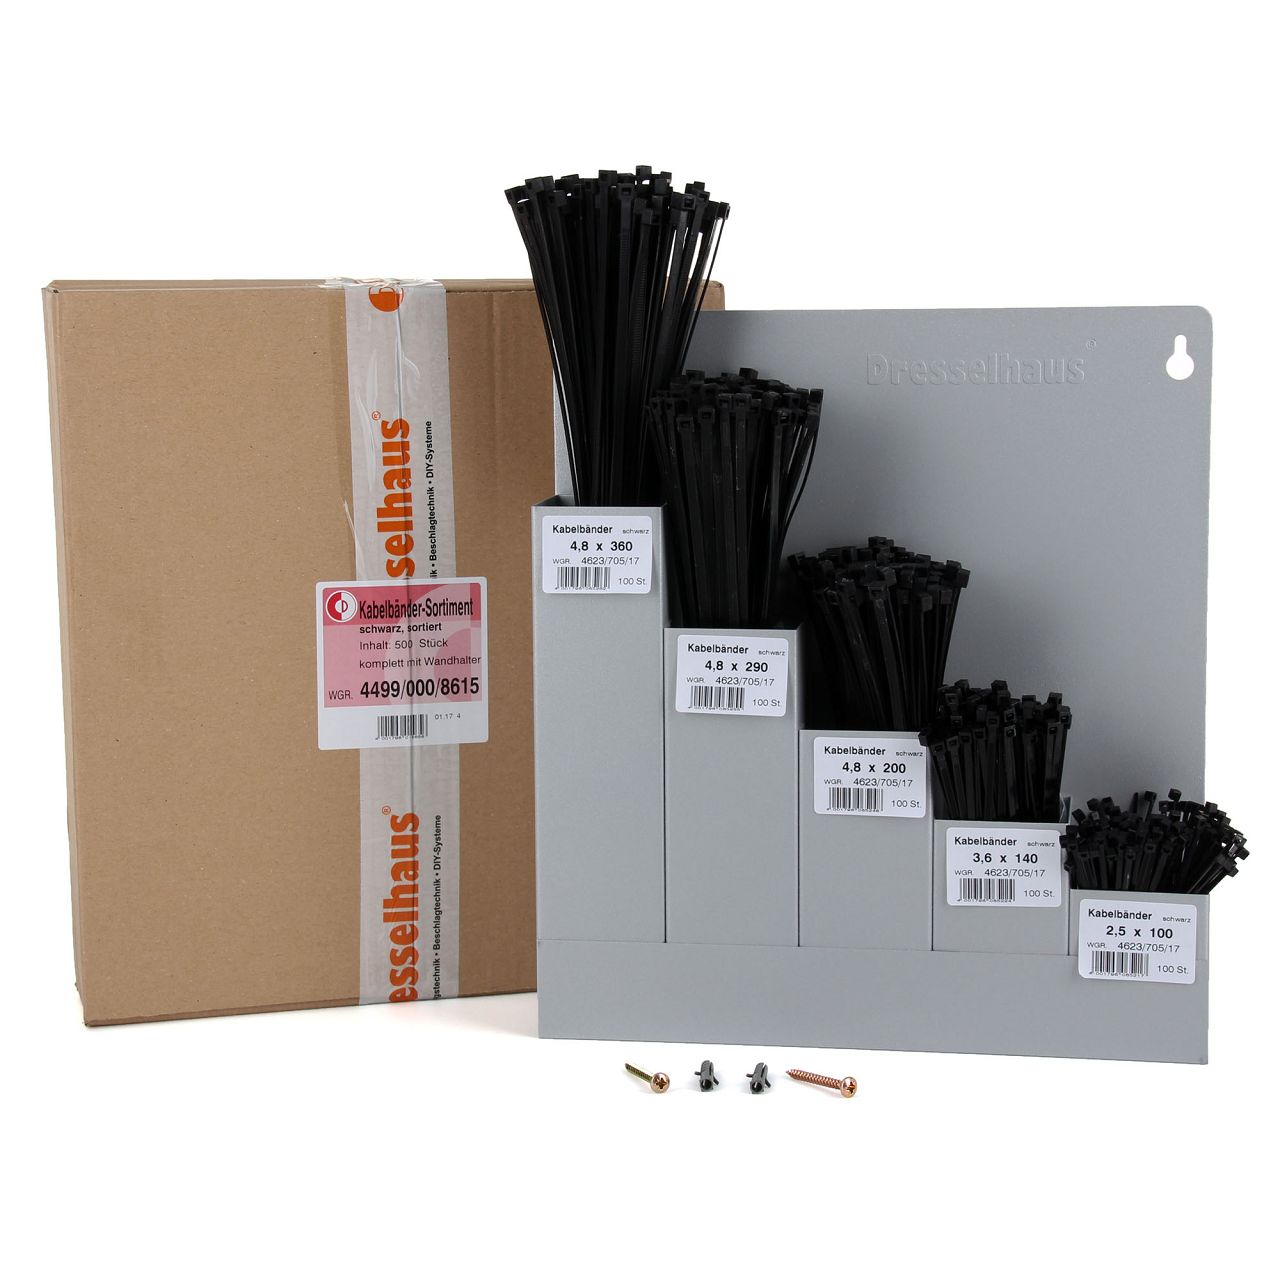 500x DRESSELHAUS Kabelbinder Kabelband Wandhalter Halter Sortiment Box gefüllt Set schwarz